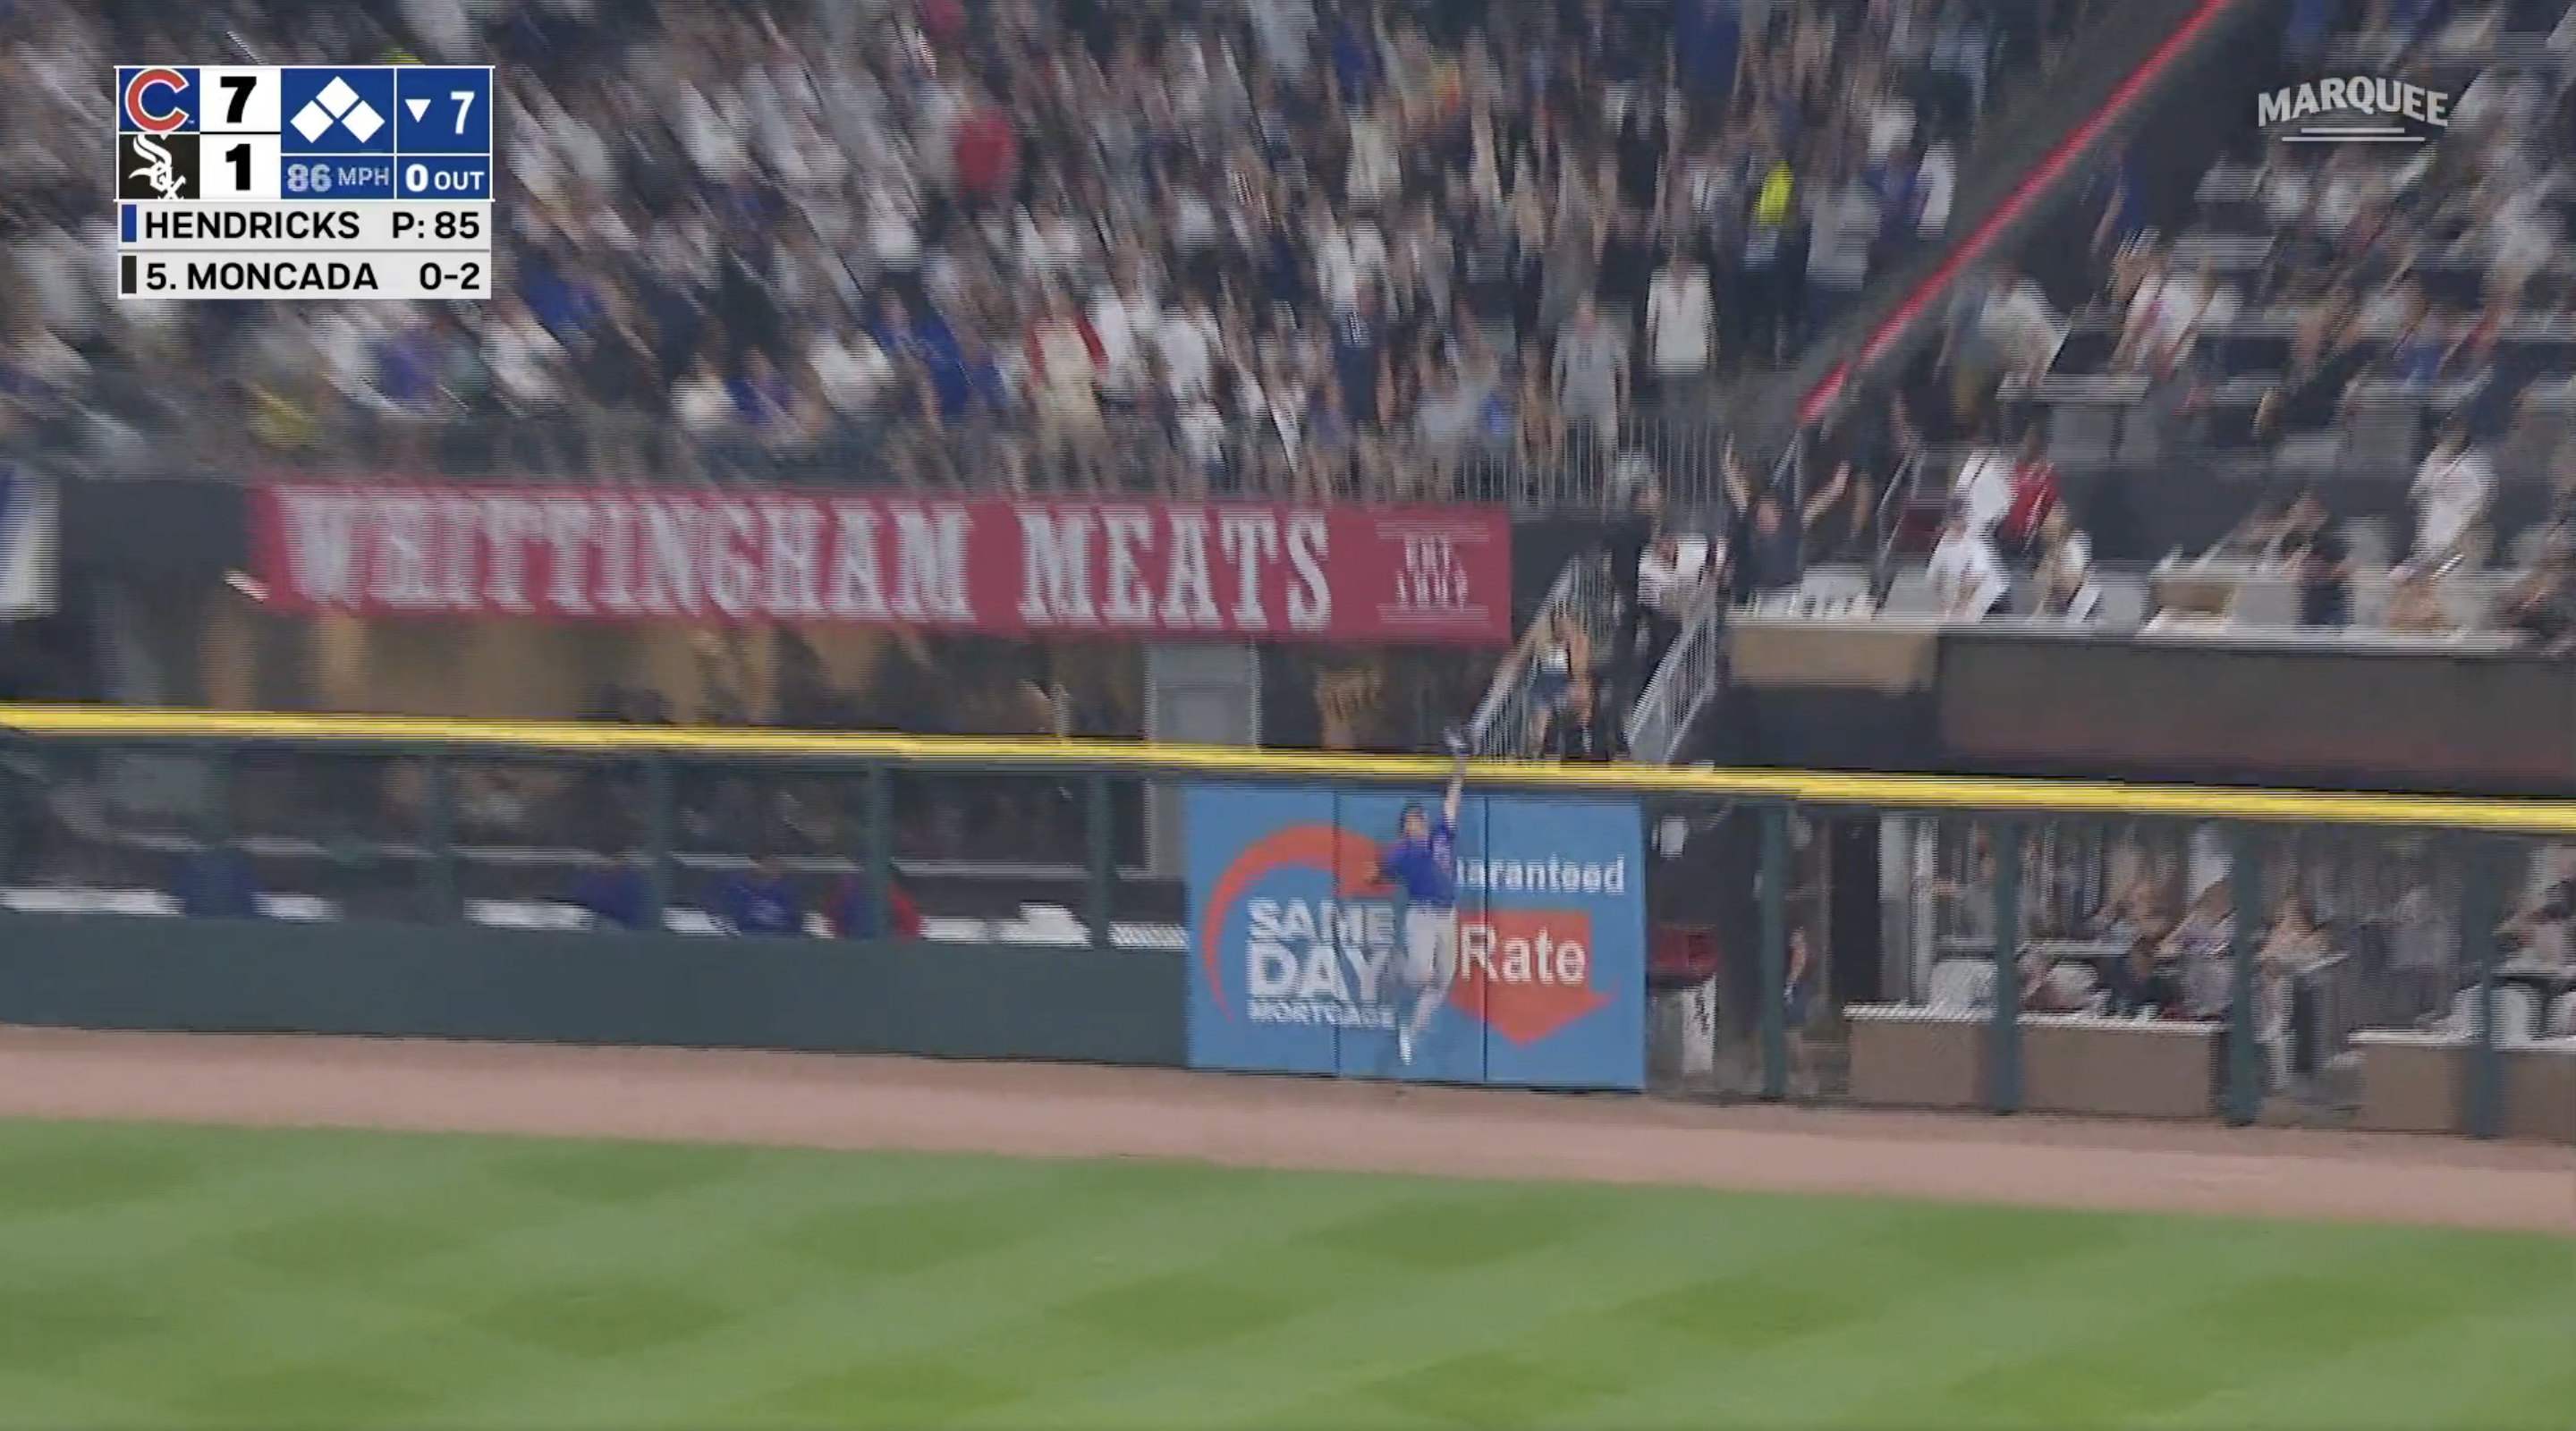 Seiya Suzuki's home run robbery against the Chicago White Sox.